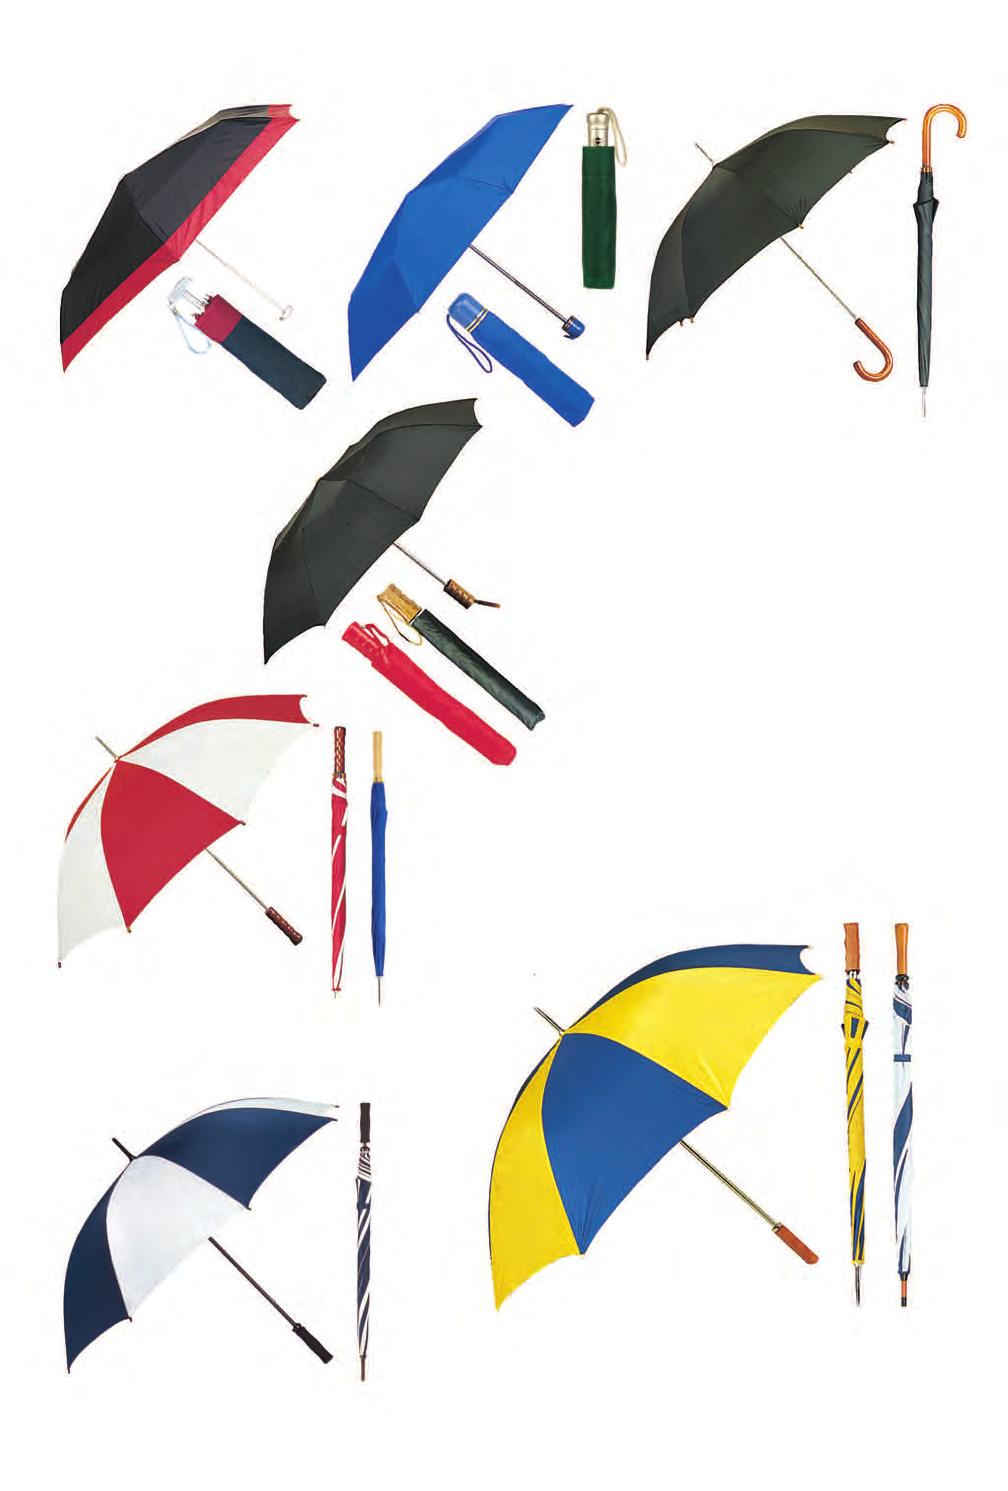 UMBRELLAS 954-67 954-57 High quality Pocket 42 3 section flat folding light weight umbrella w/ flat handle, per 12 pc. pack. Asst Color Borders.